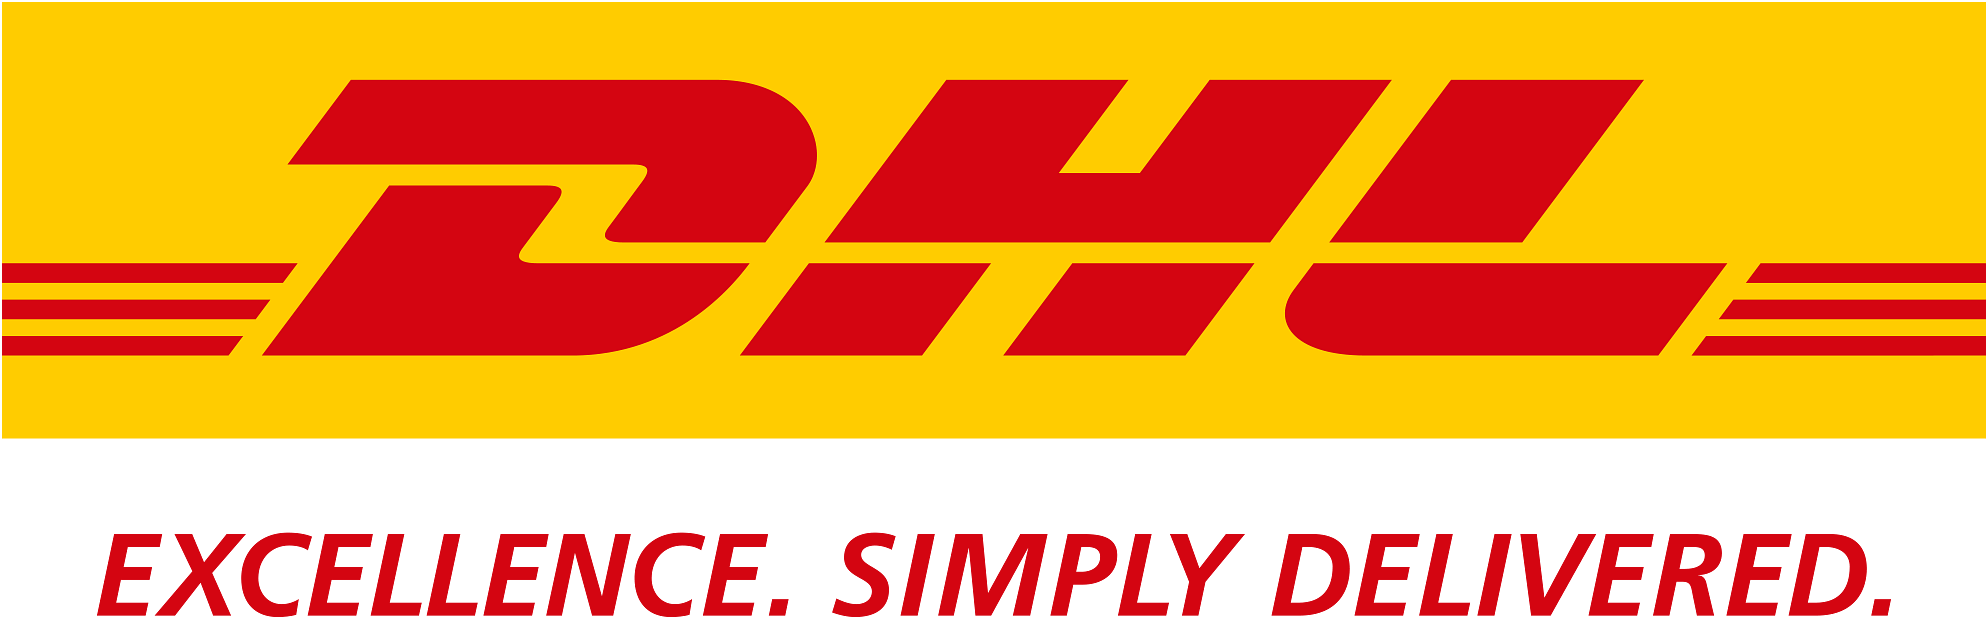 DHL logo tagline